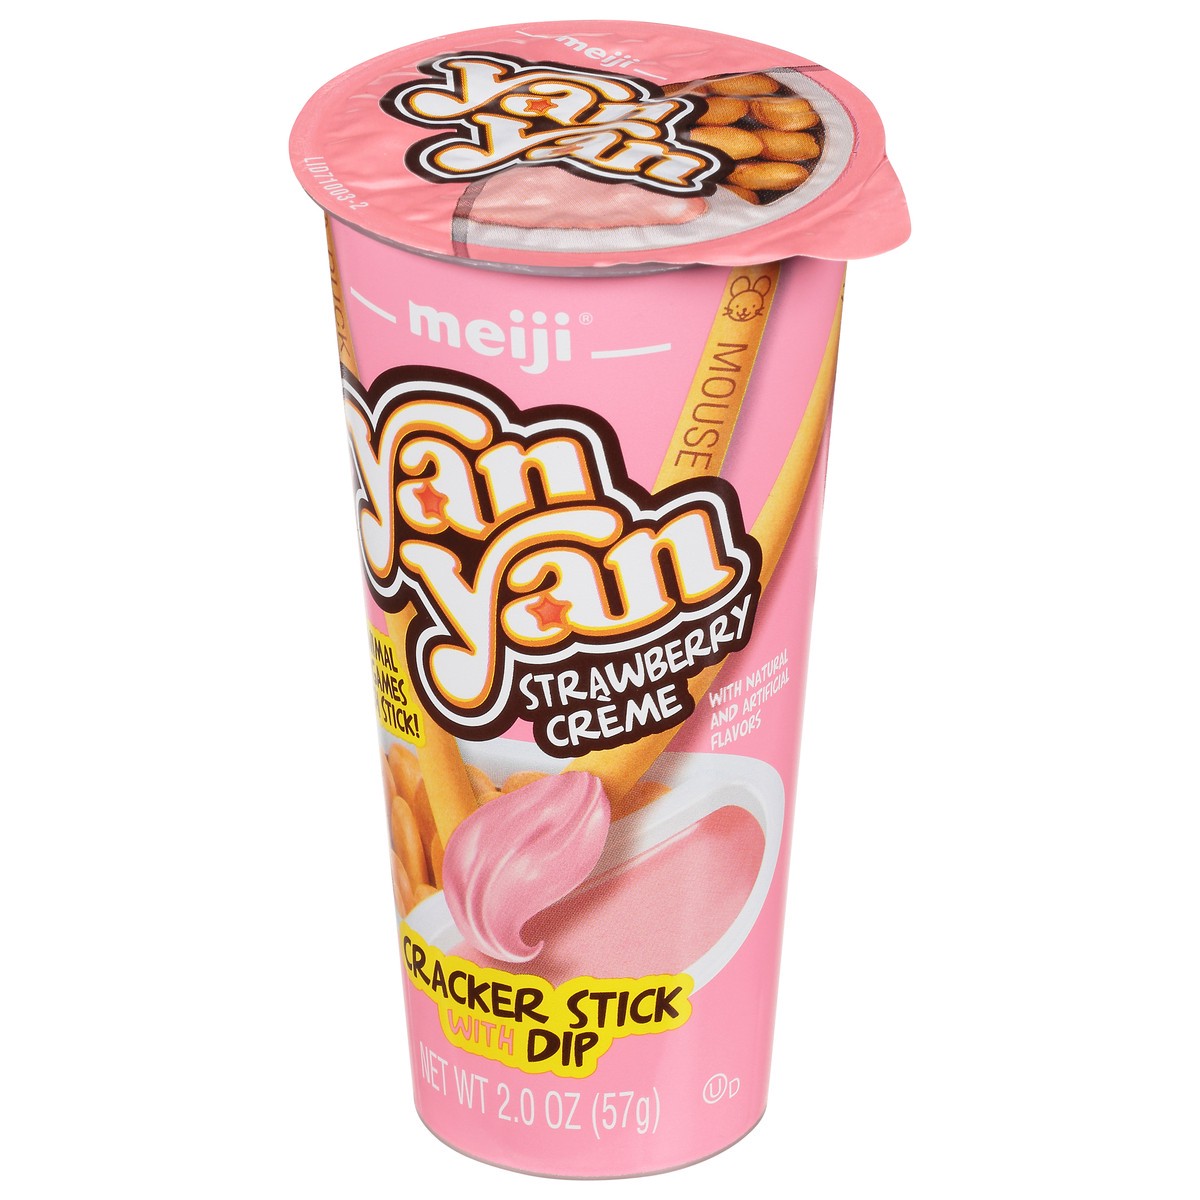 slide 5 of 9, Yan Yan Strawberry Creme Cracker Stick with Dip 2.0 oz, 2 oz